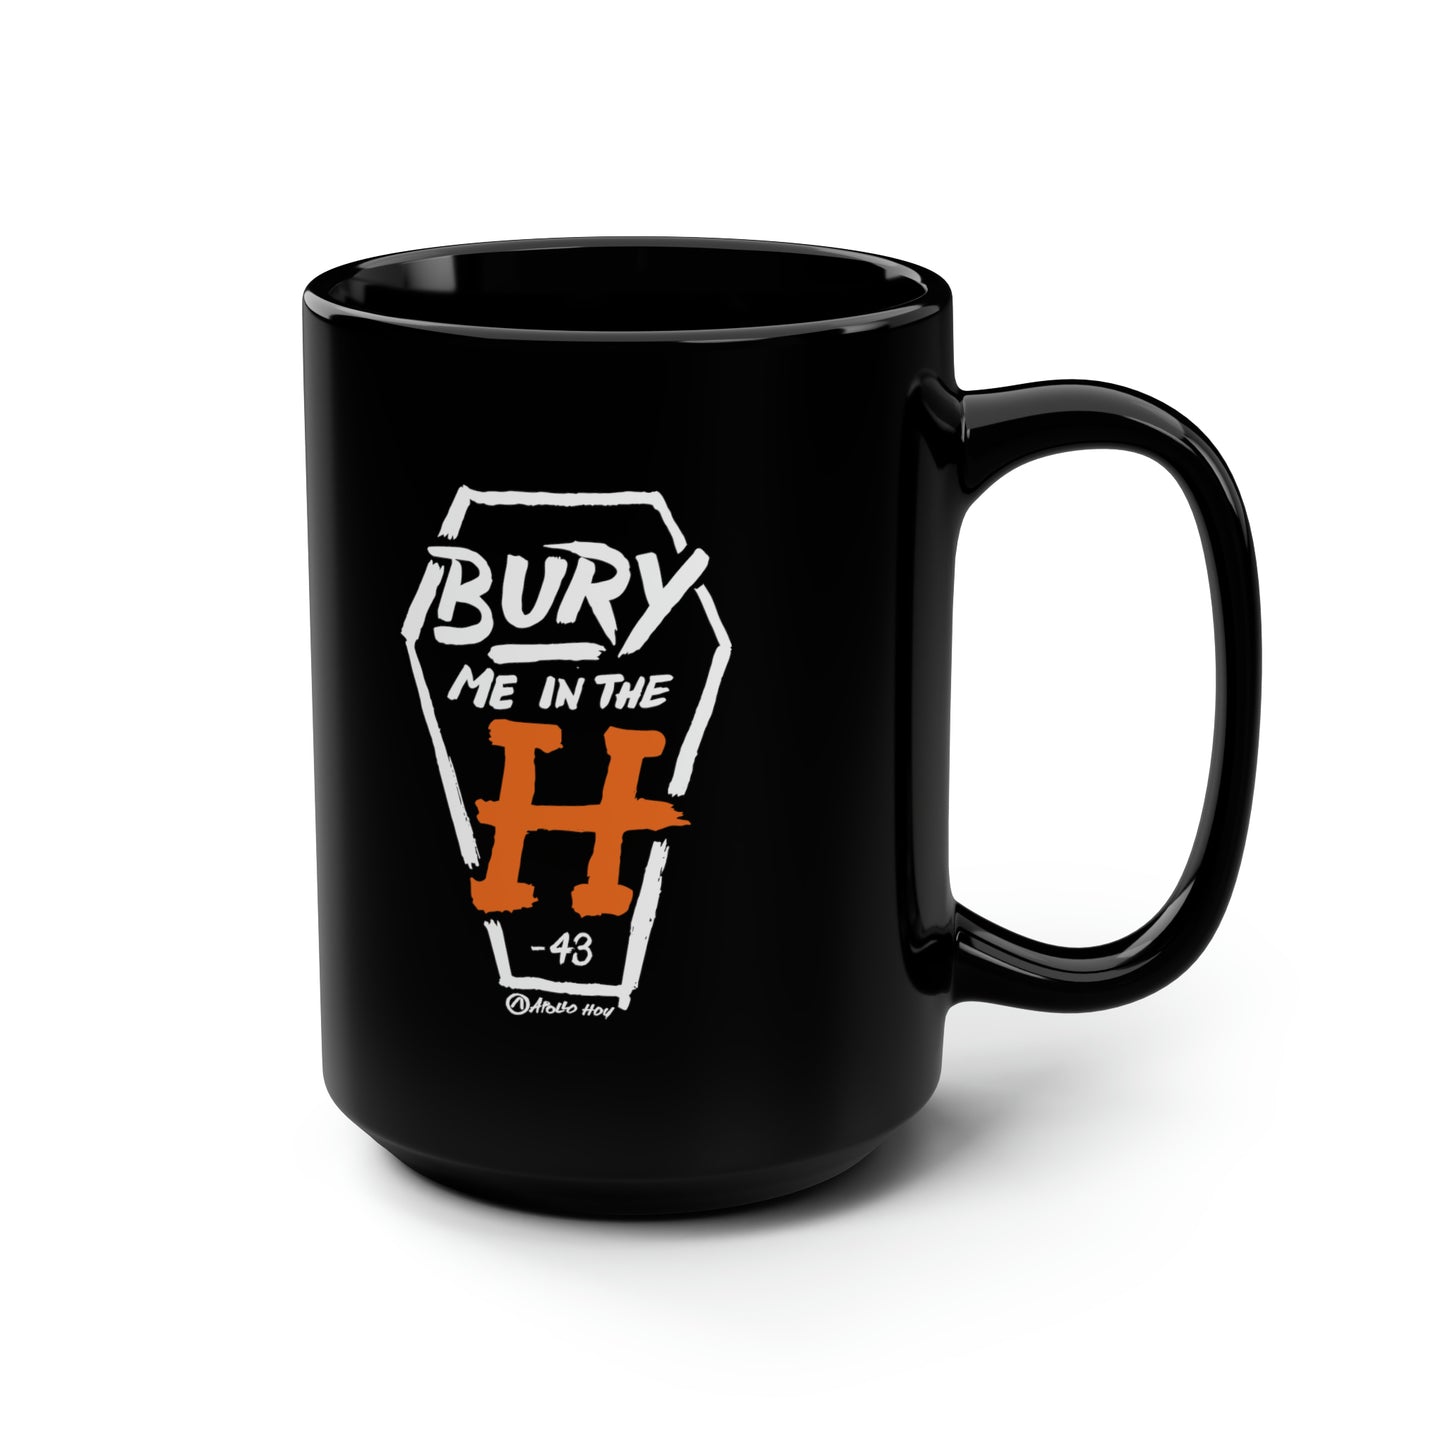 Bury Me In The H (Coffin Variant) Black Mug 15oz